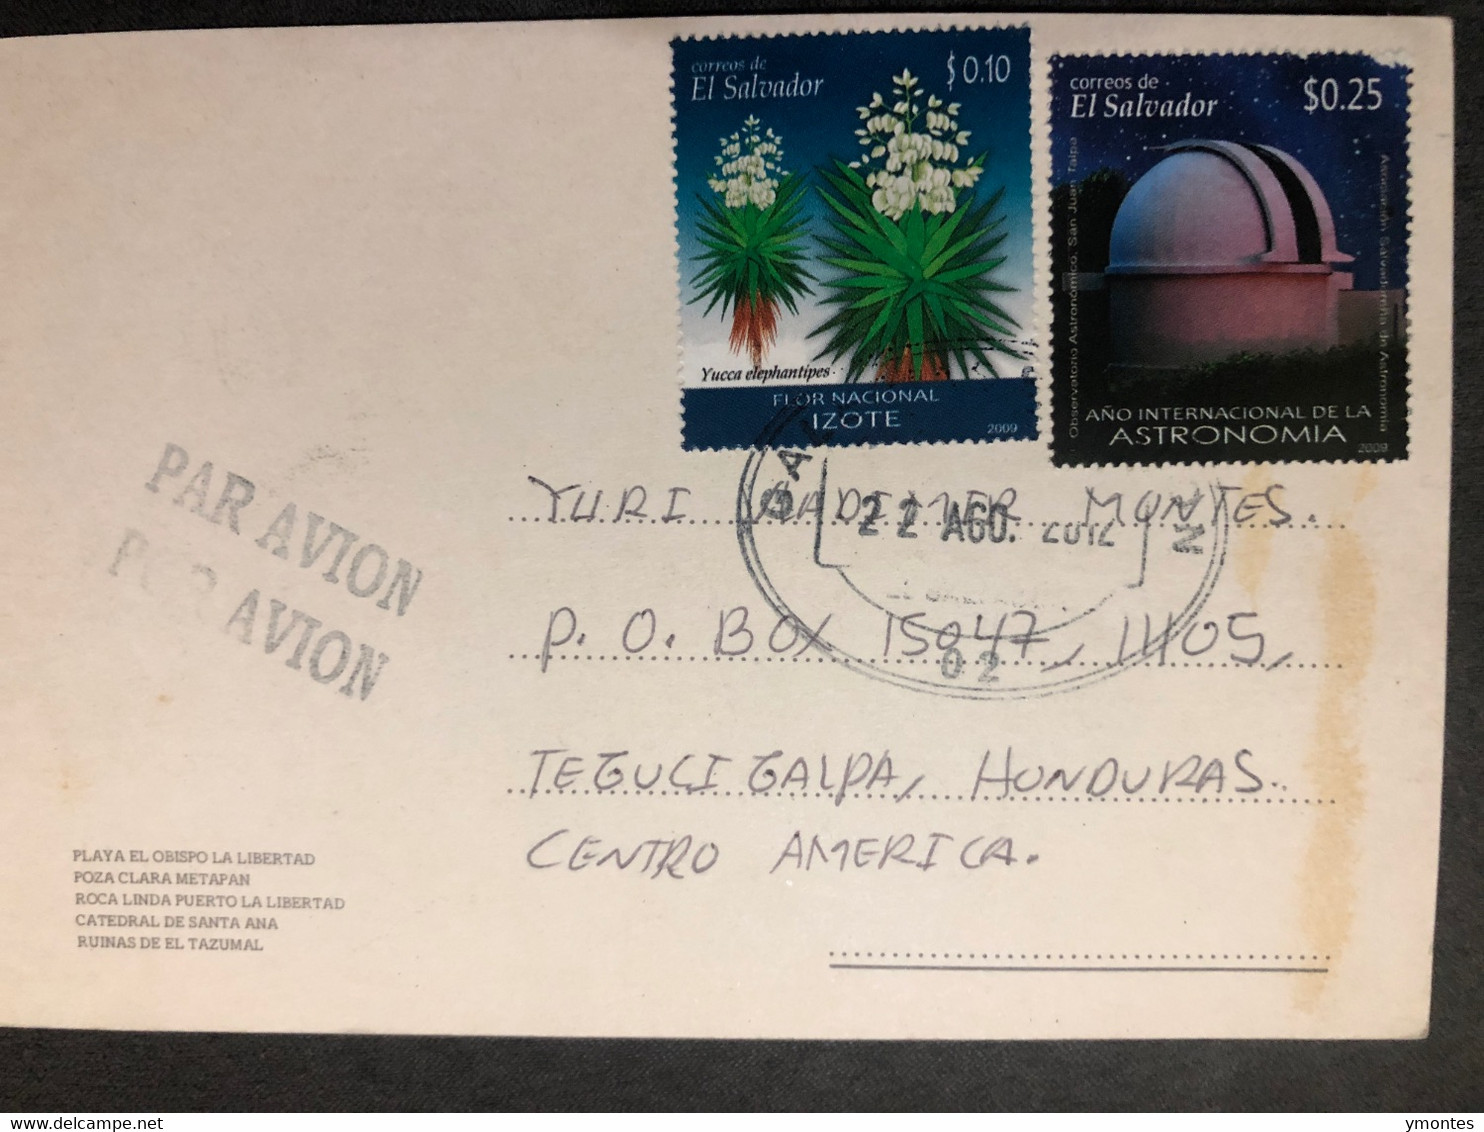 Postcard Different View El Salvador 2012 ( Astronomy And Plant Stamps) - El Salvador